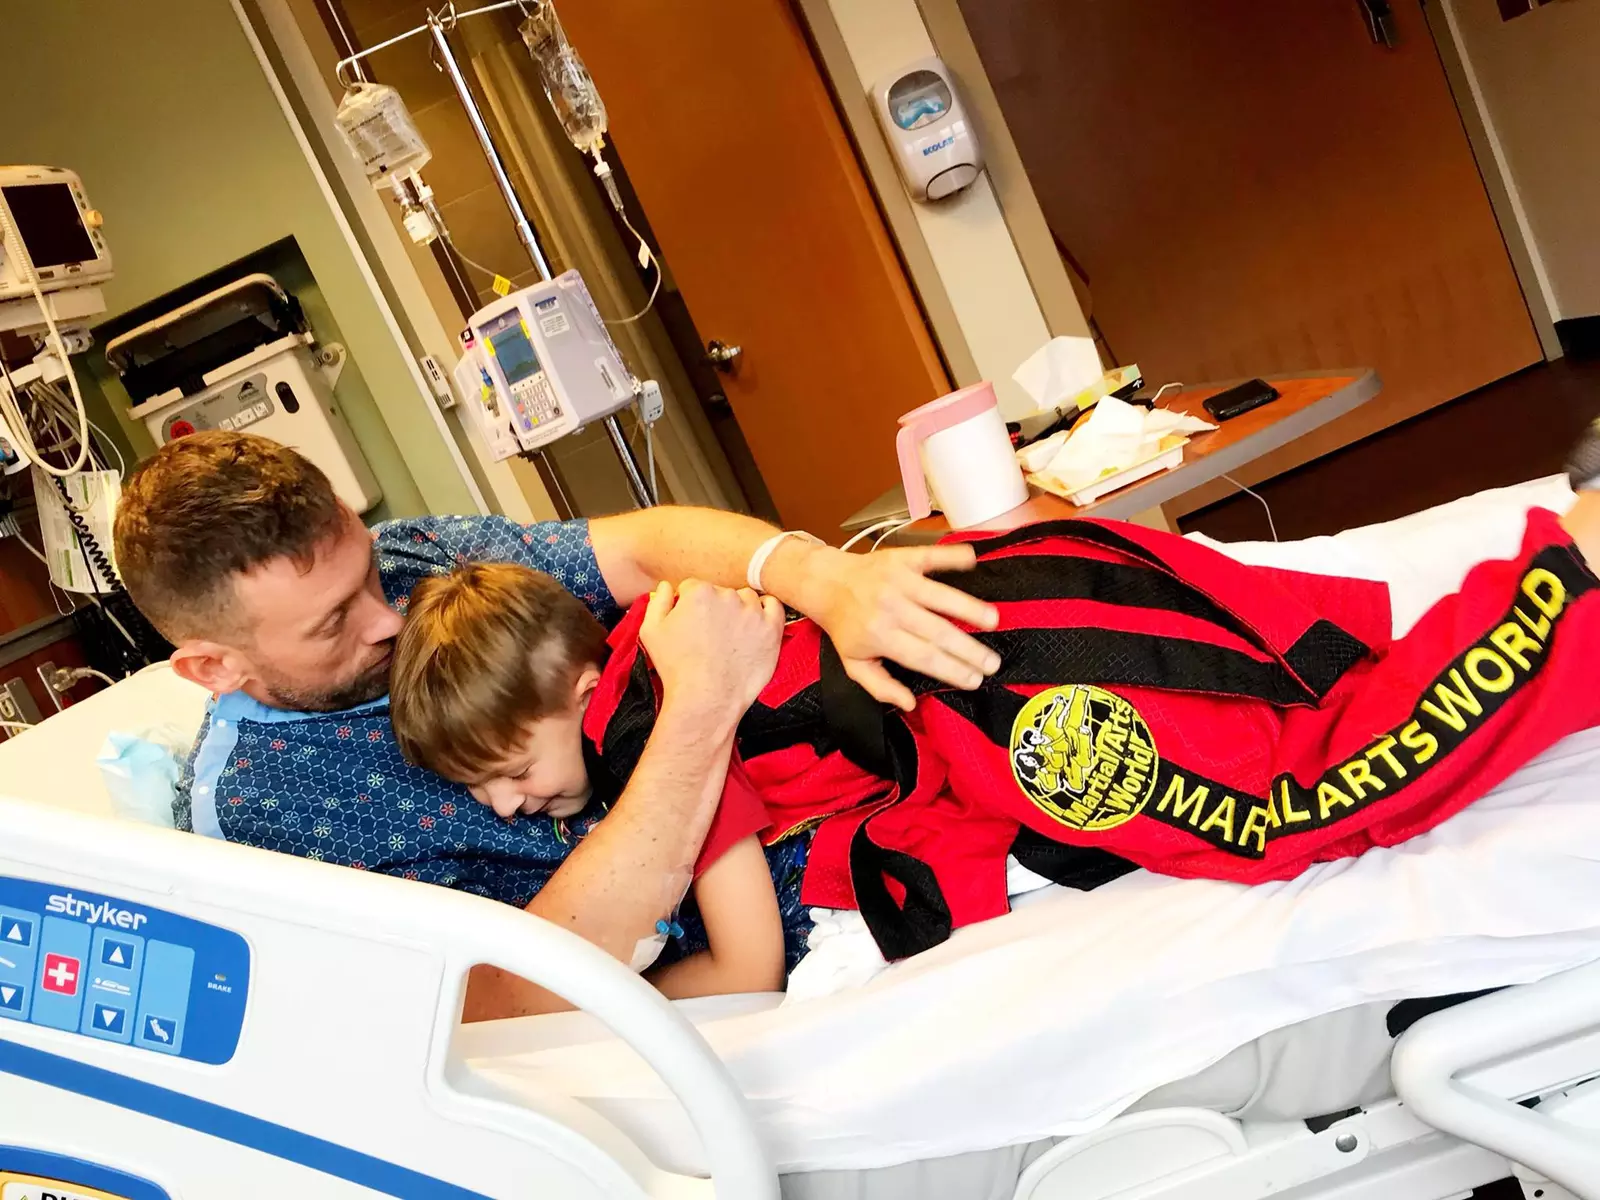 Robert Leetun and son in hospital